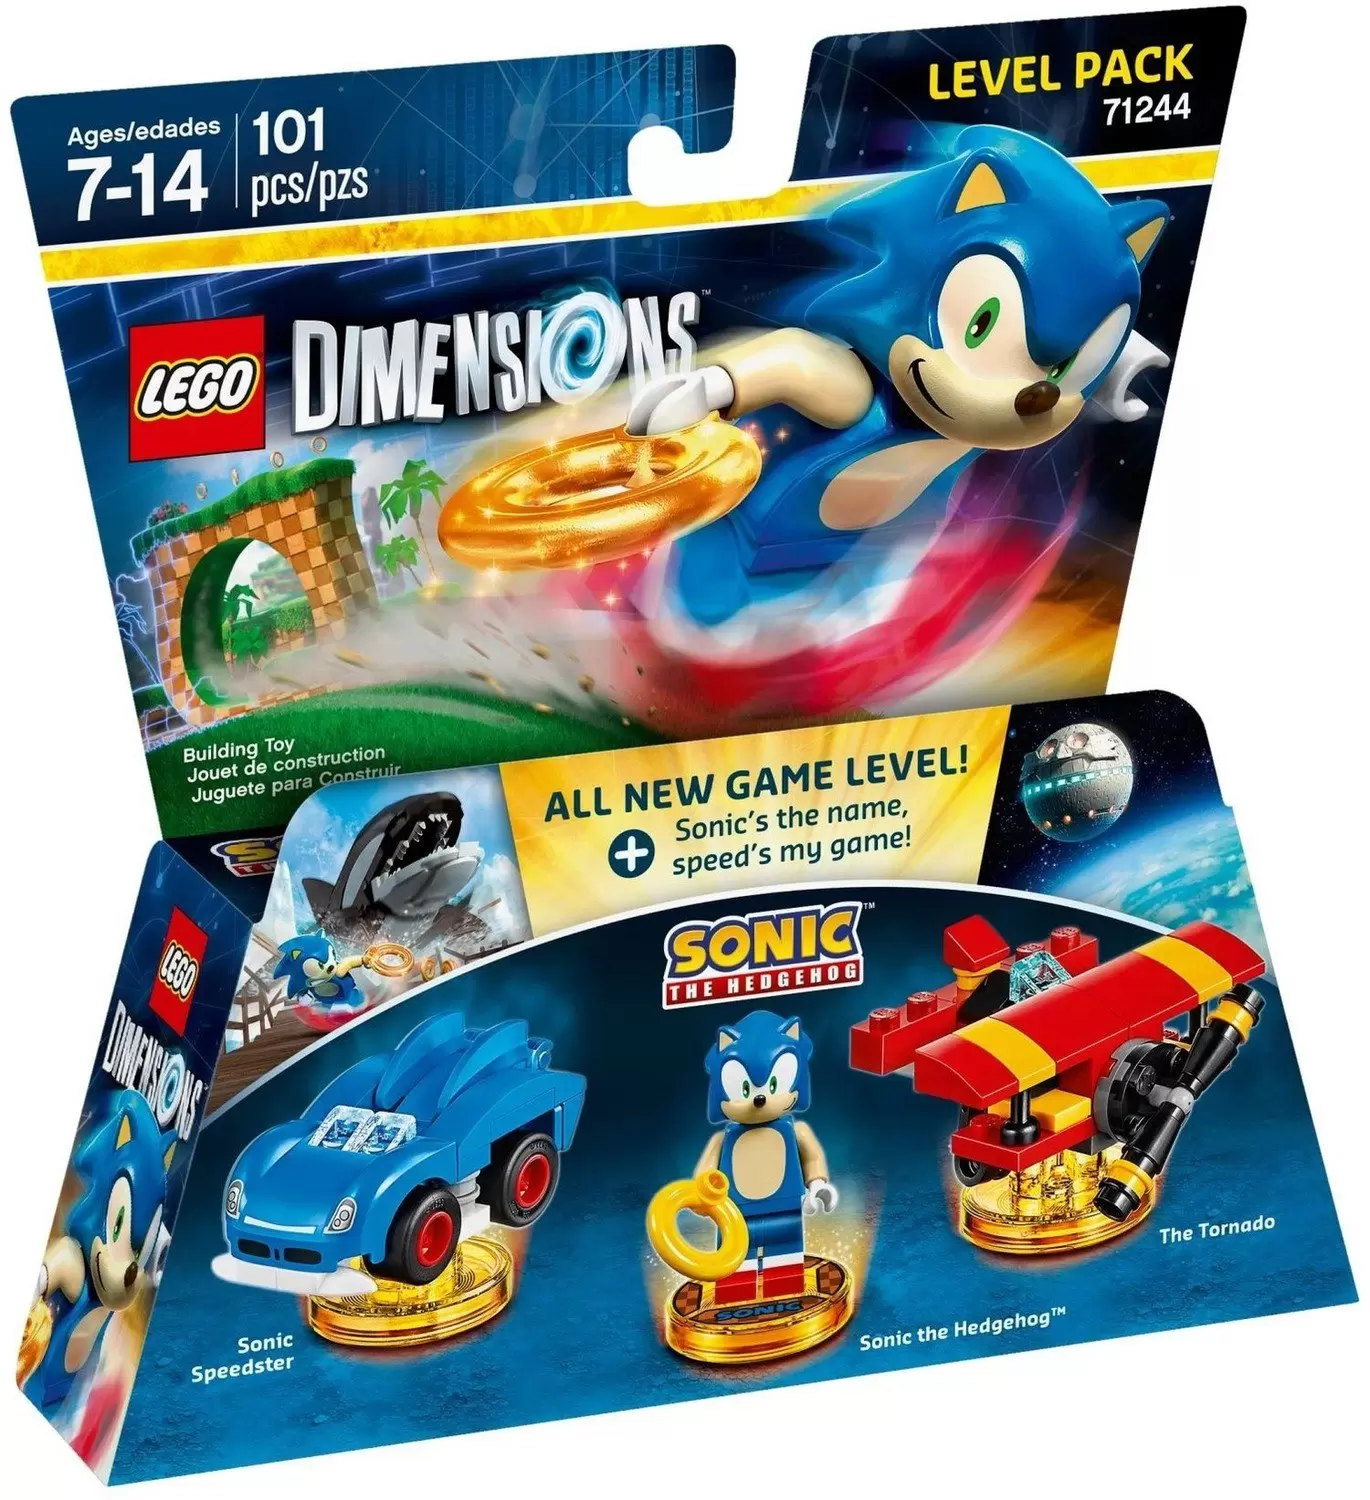 Sonic the Hedgehog Level Pack - LEGO Dimensions set 71244